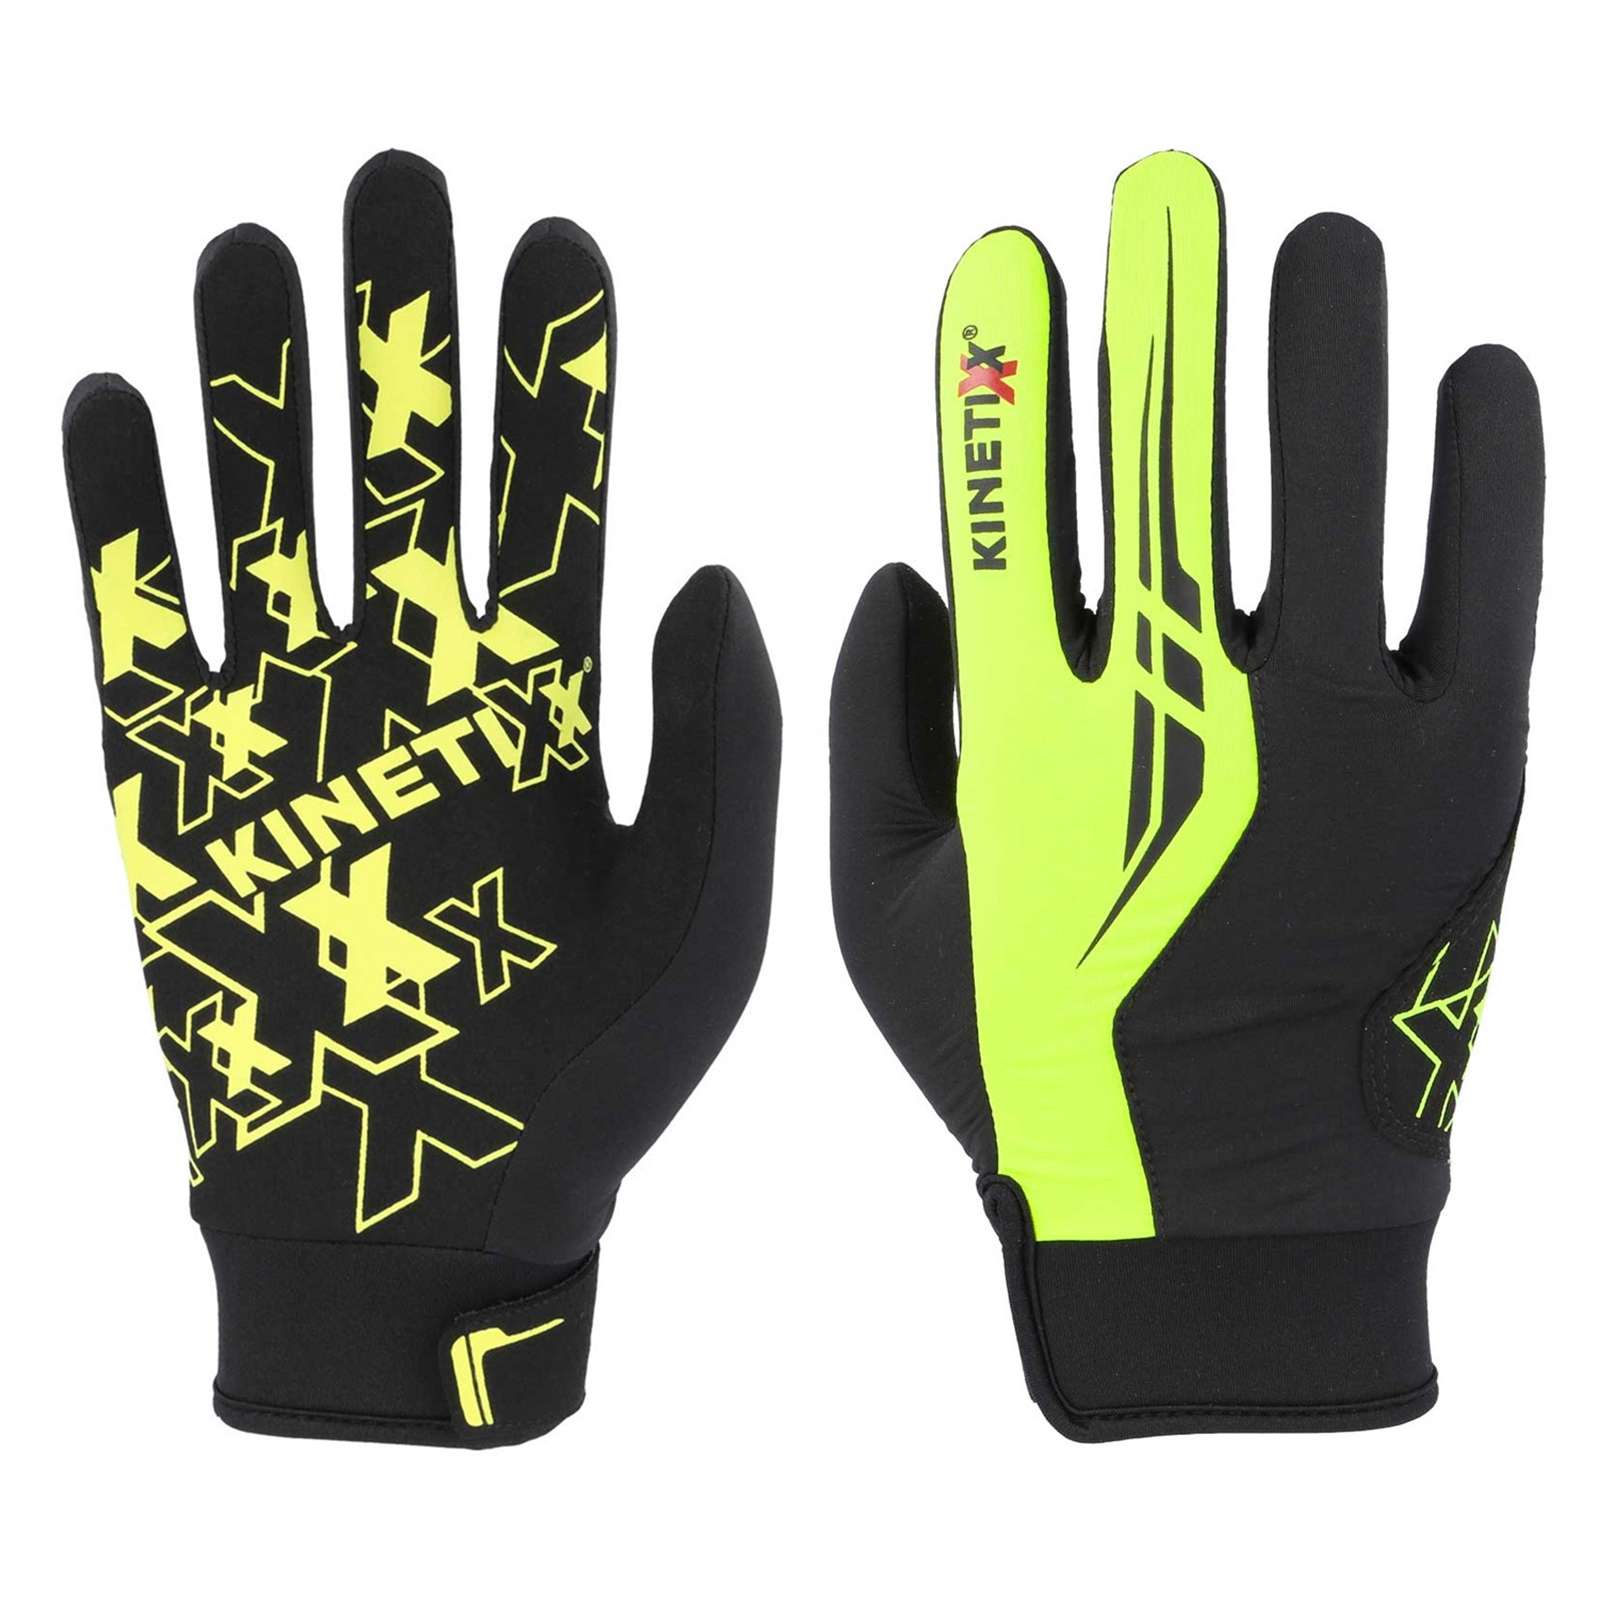 KINETIXX Nebeli Unisex Handschuhe schwarz gelb